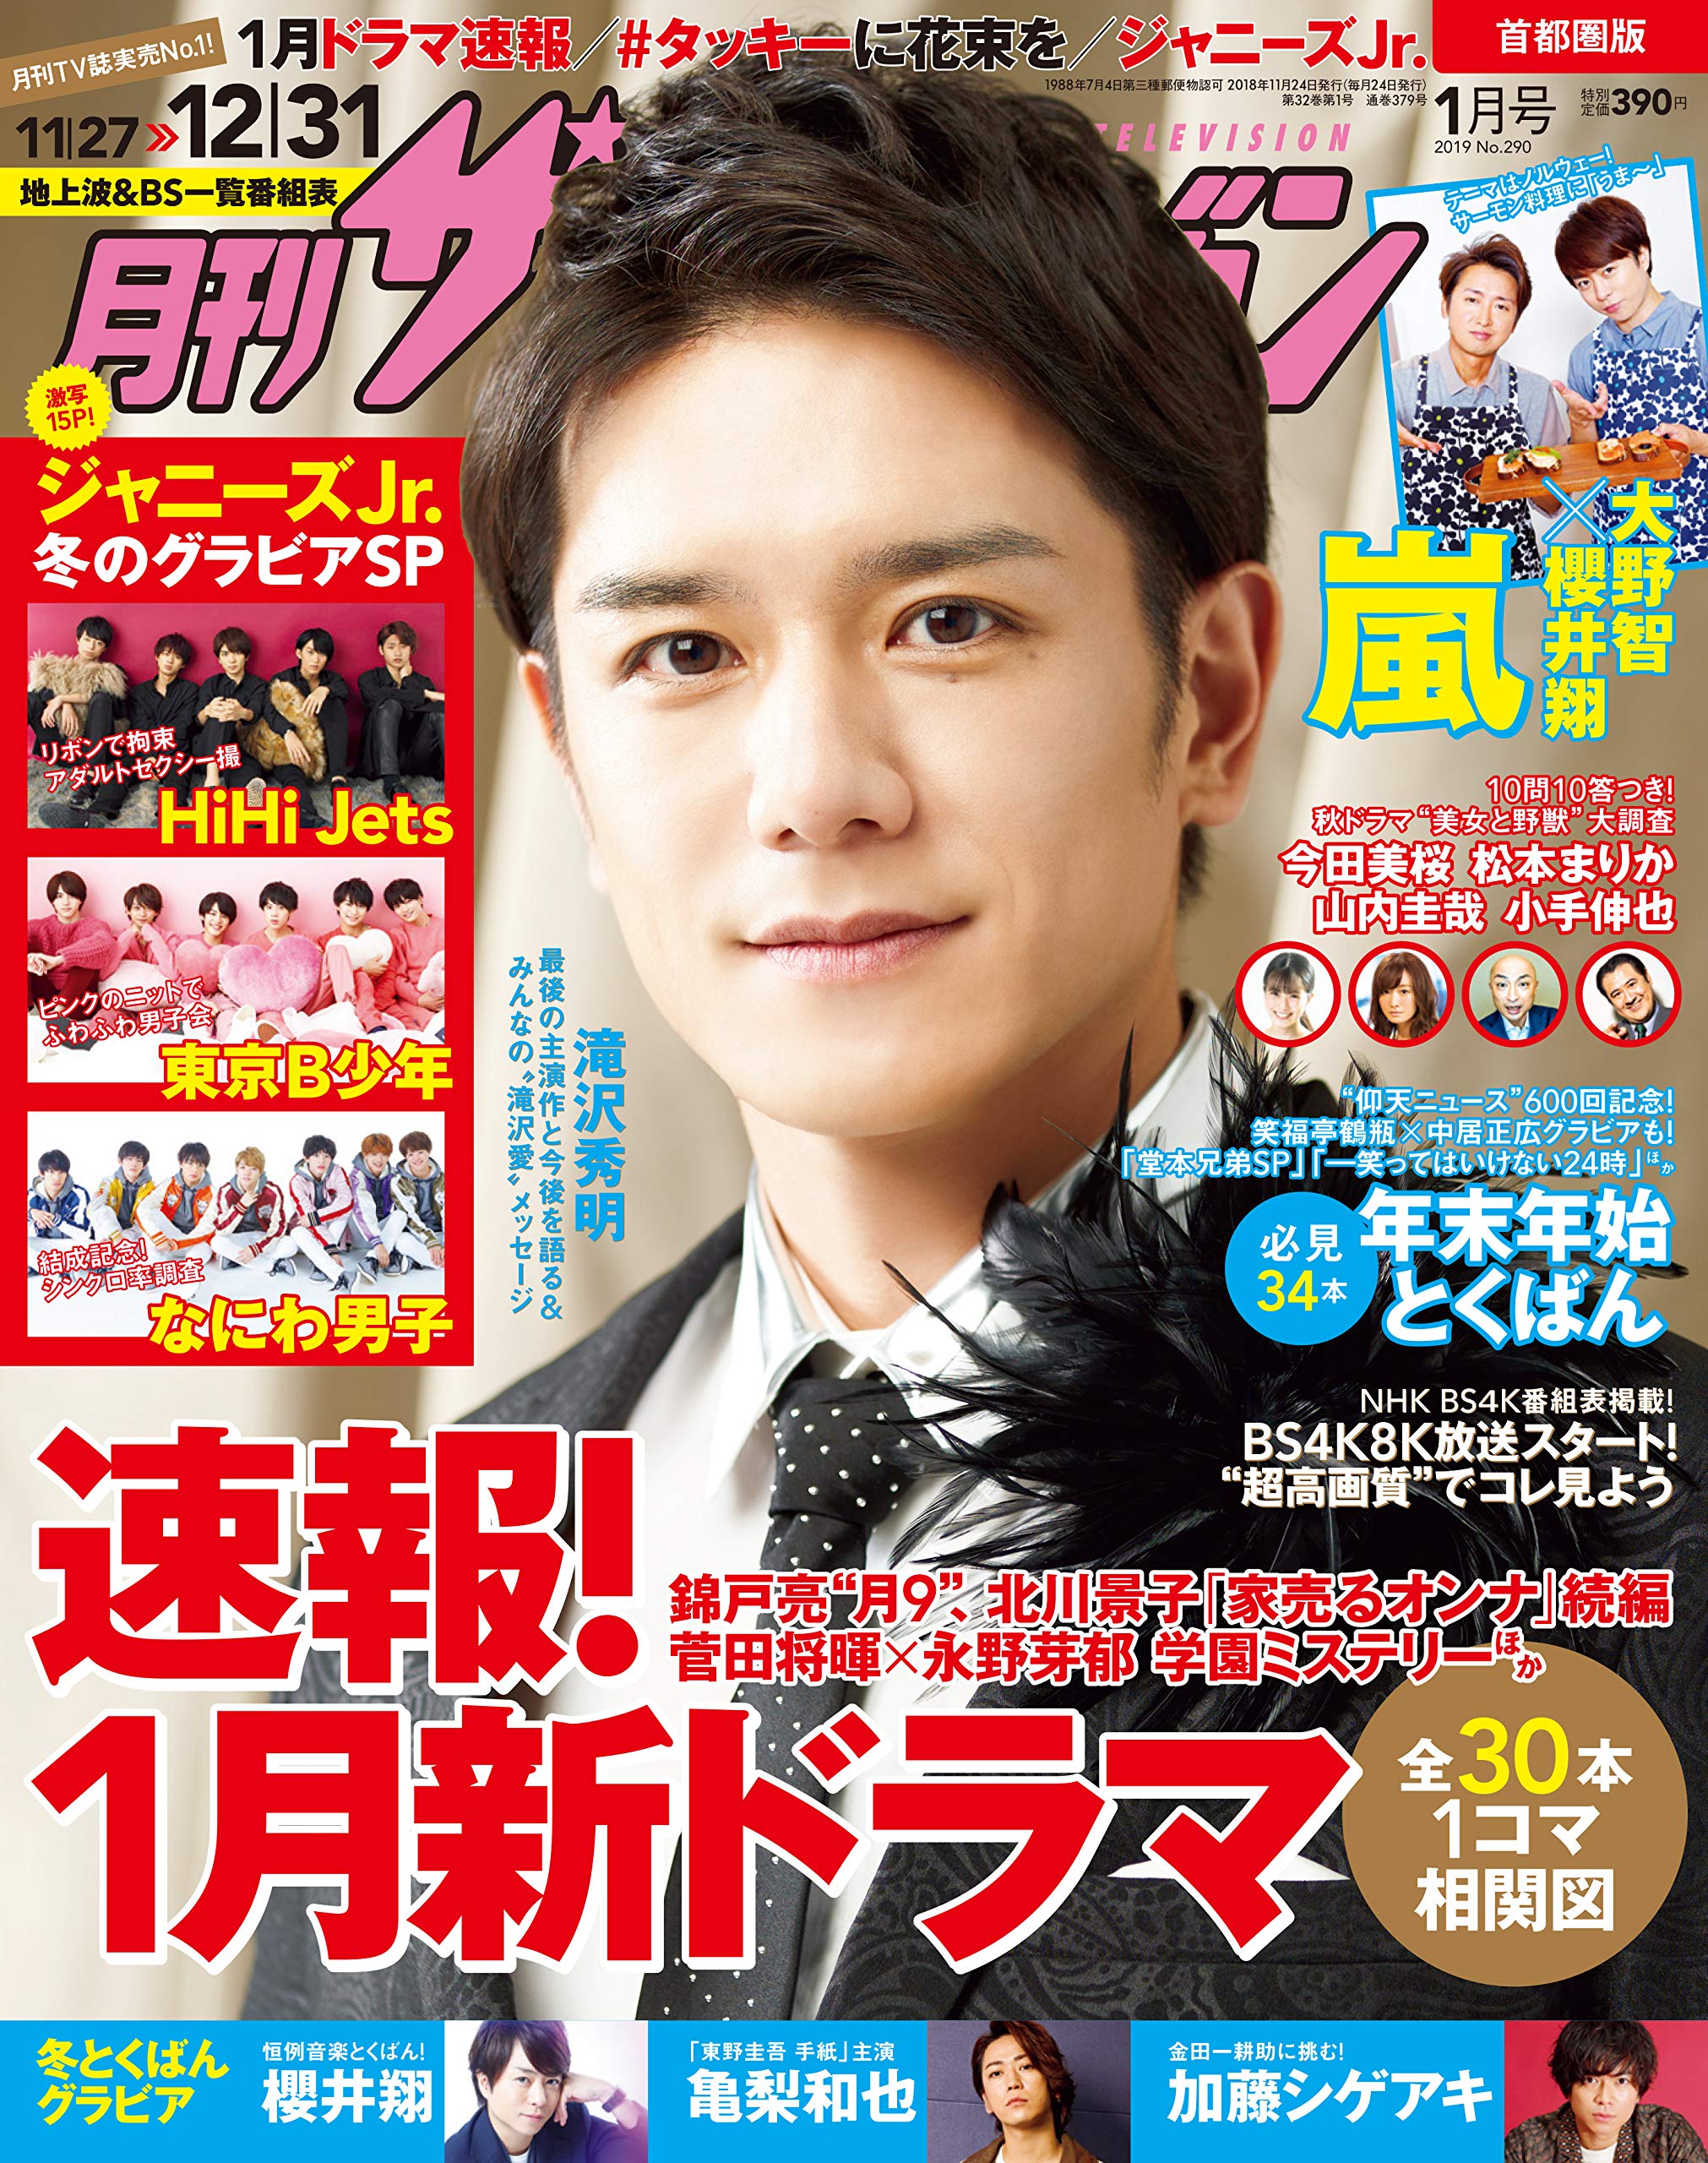 Takizawa Hideaki on cover of Gekkan The Television Jan 2019 issue